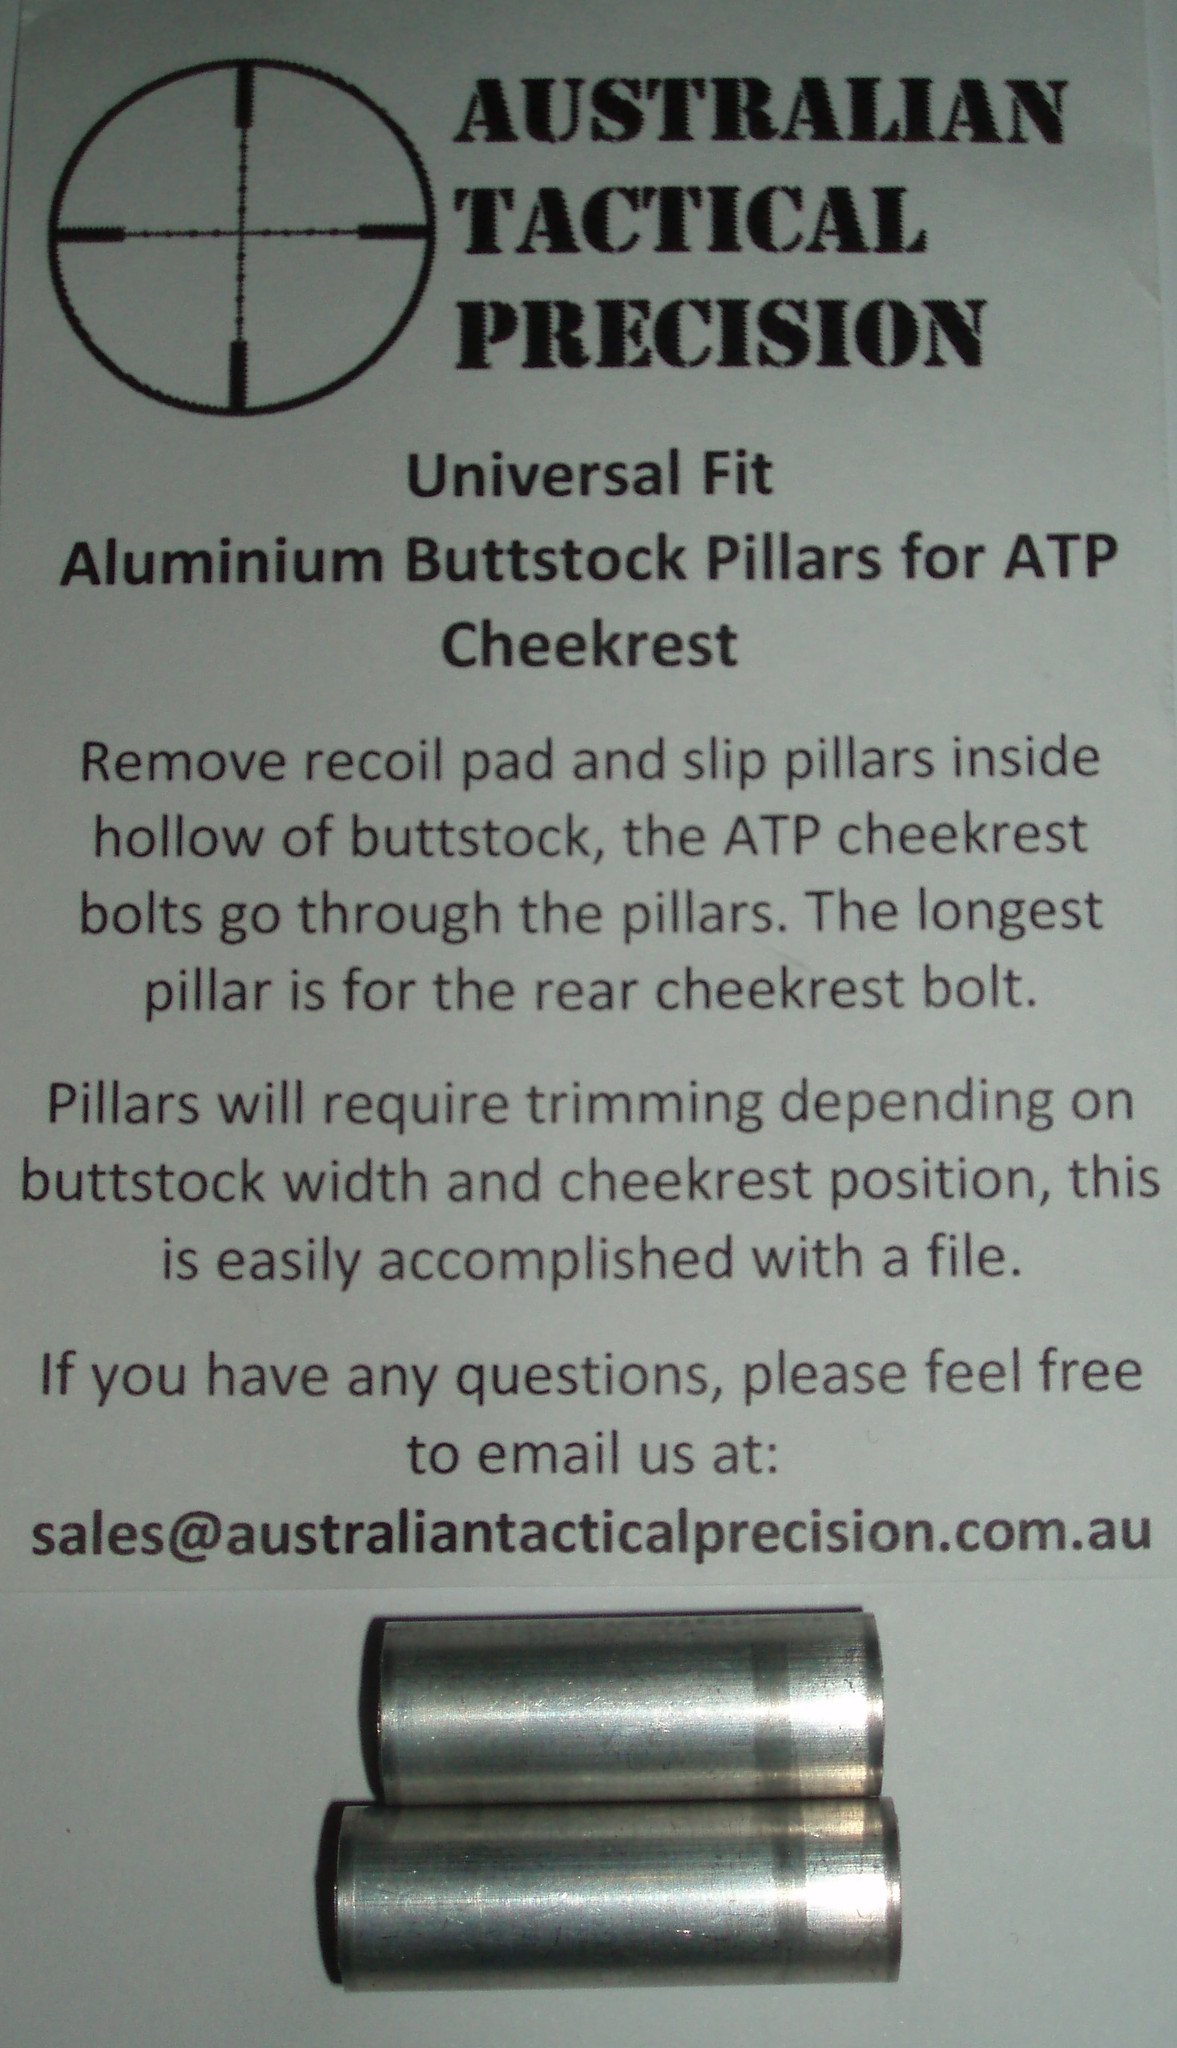 Universal Fit Aluminium Buttstock Pillars for the ATP Cheekrest - Australian Tactical Precision